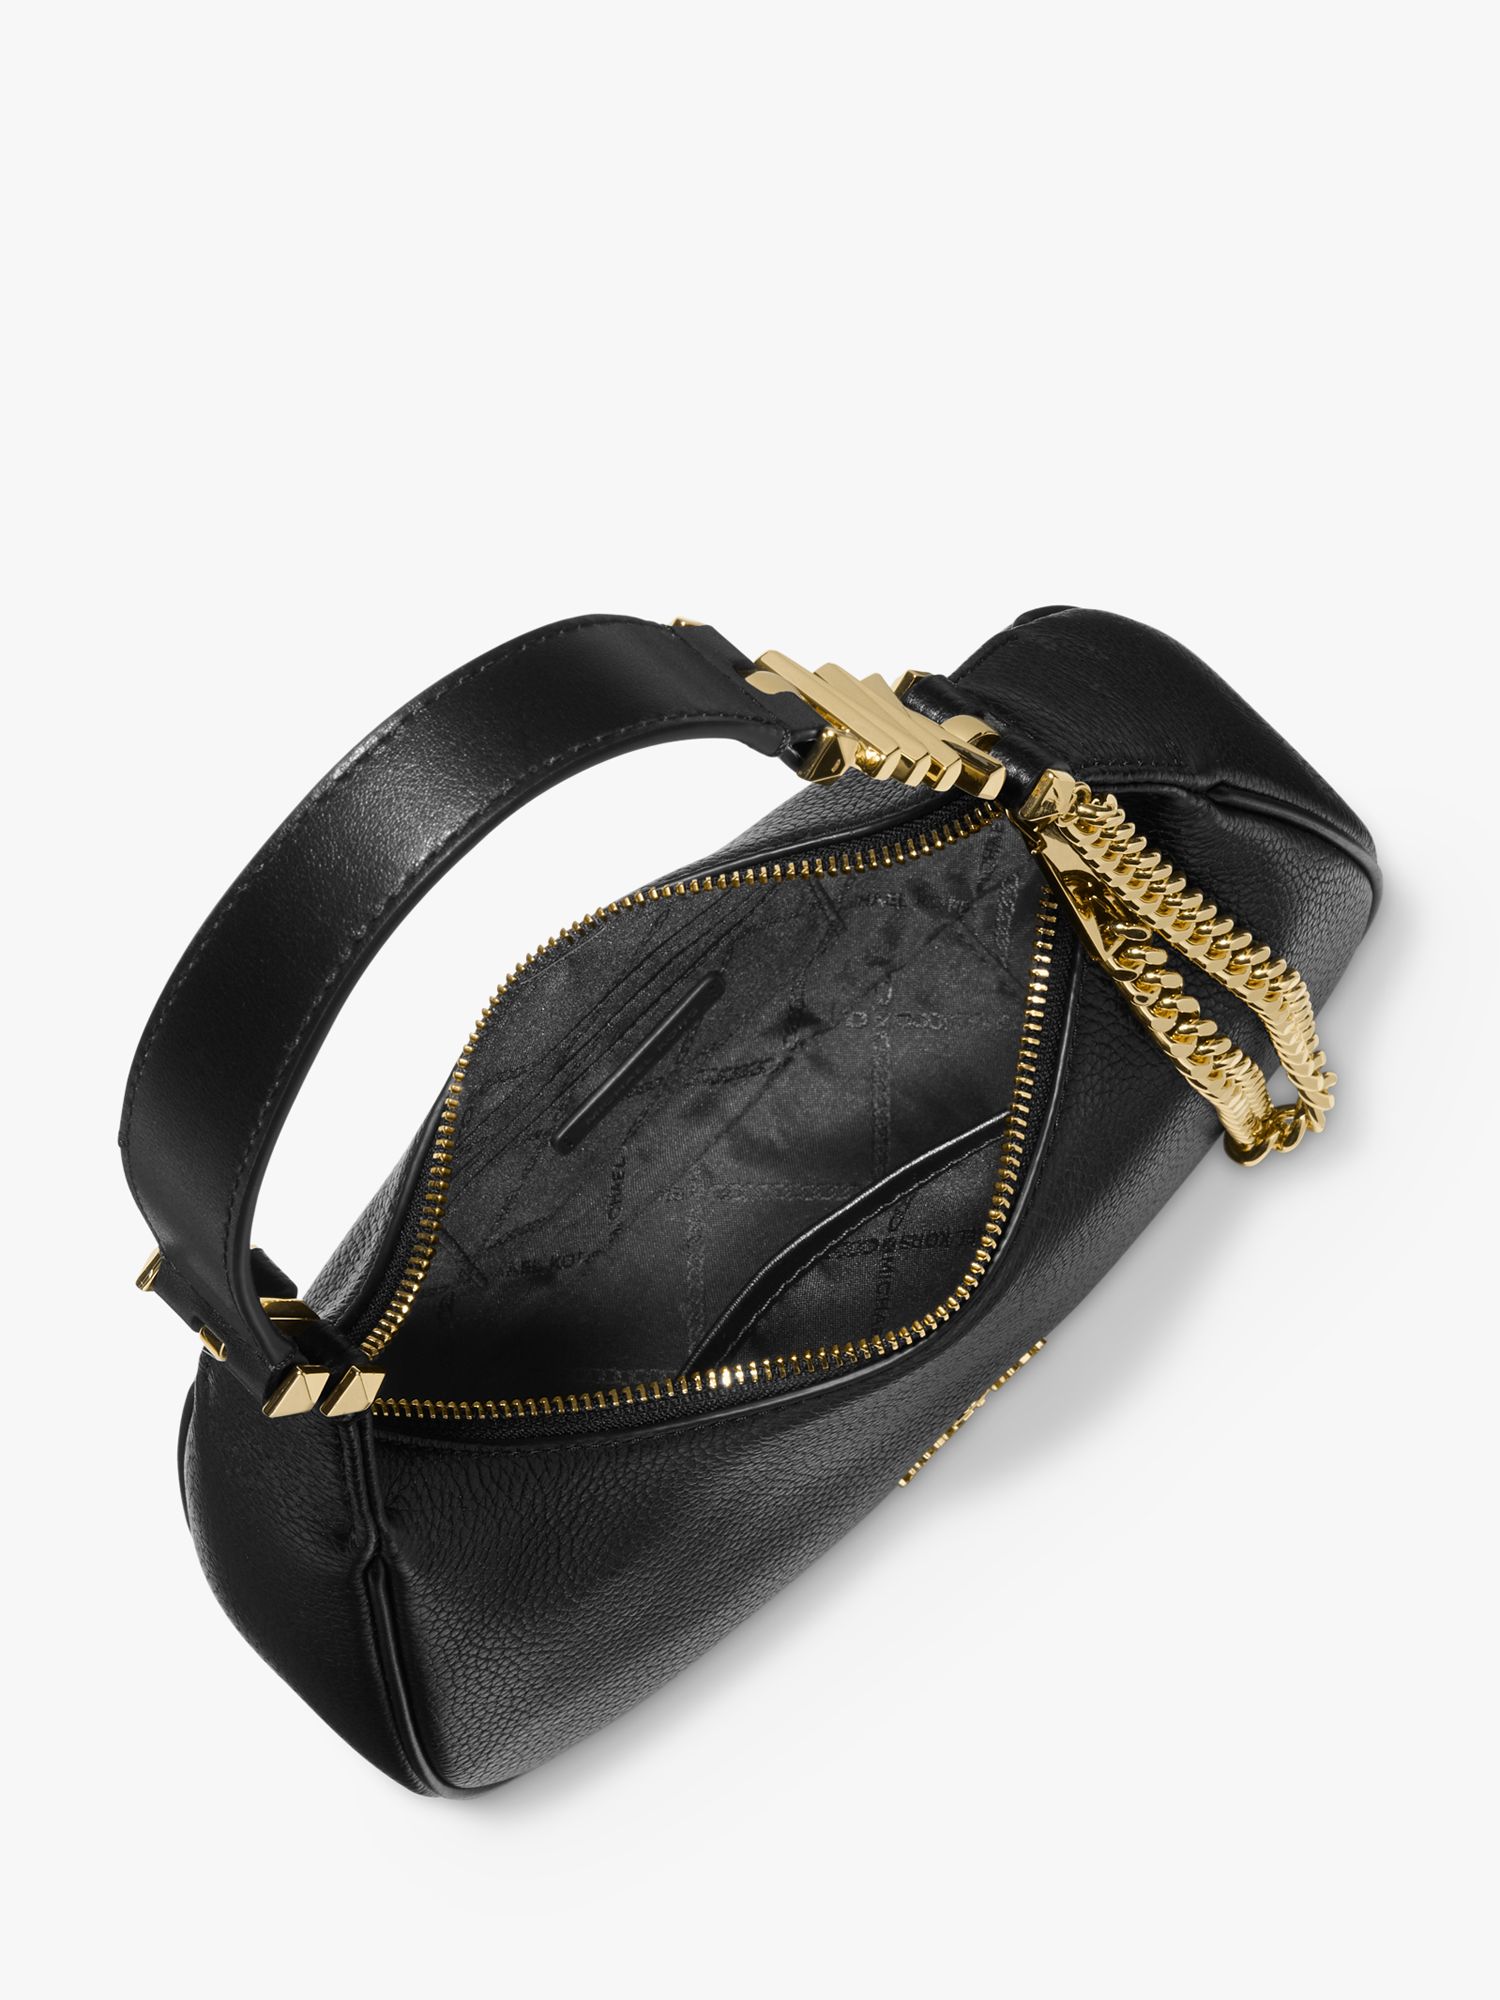 Michael Kors Piper Small Pouchette Shoulder Bag - Black